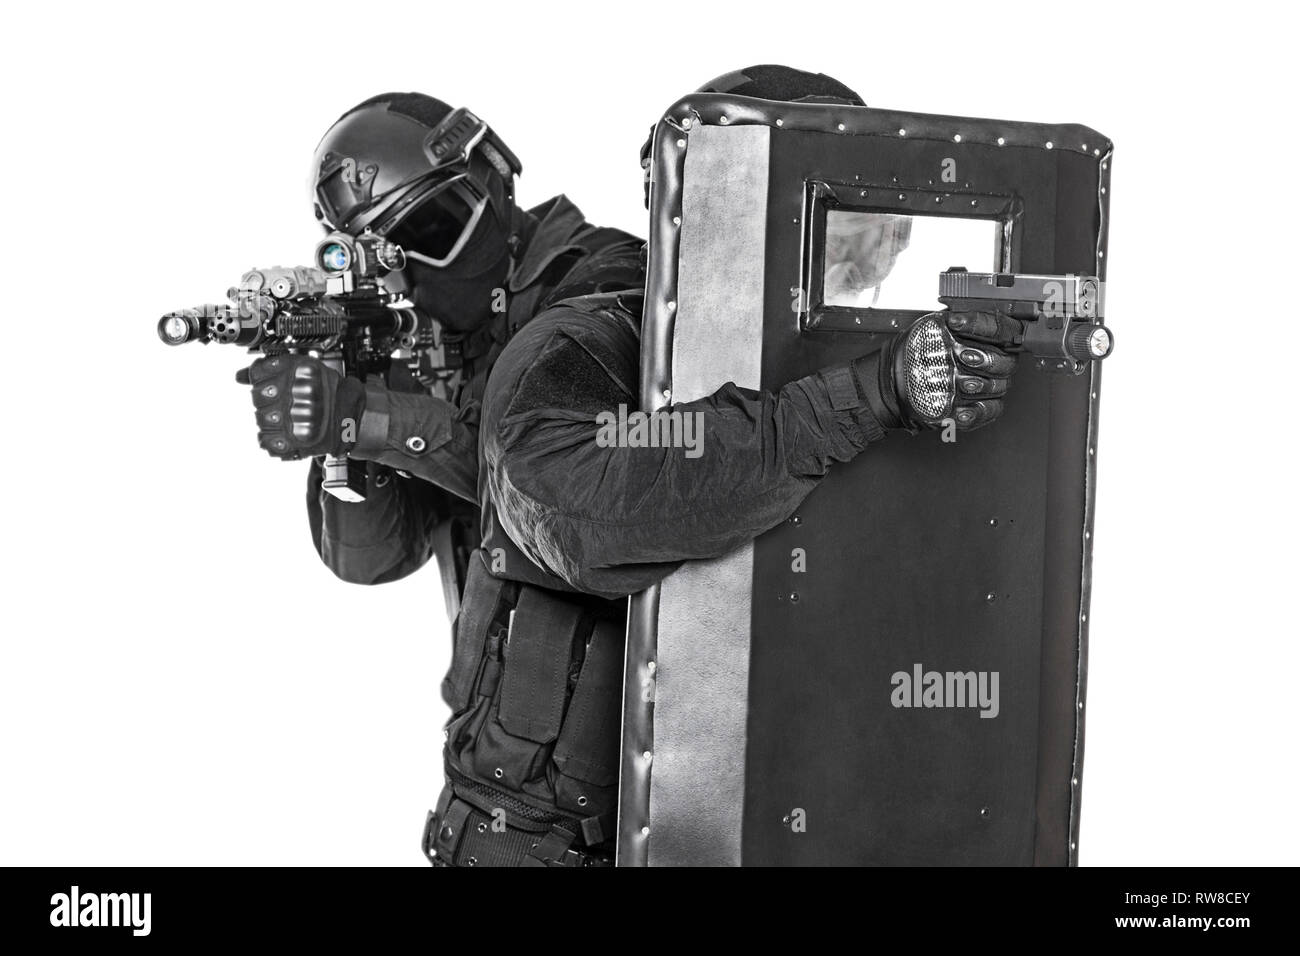 https://c8.alamy.com/comp/RW8CEY/studio-shot-of-swat-police-special-forces-hiding-behind-ballistic-shield-RW8CEY.jpg